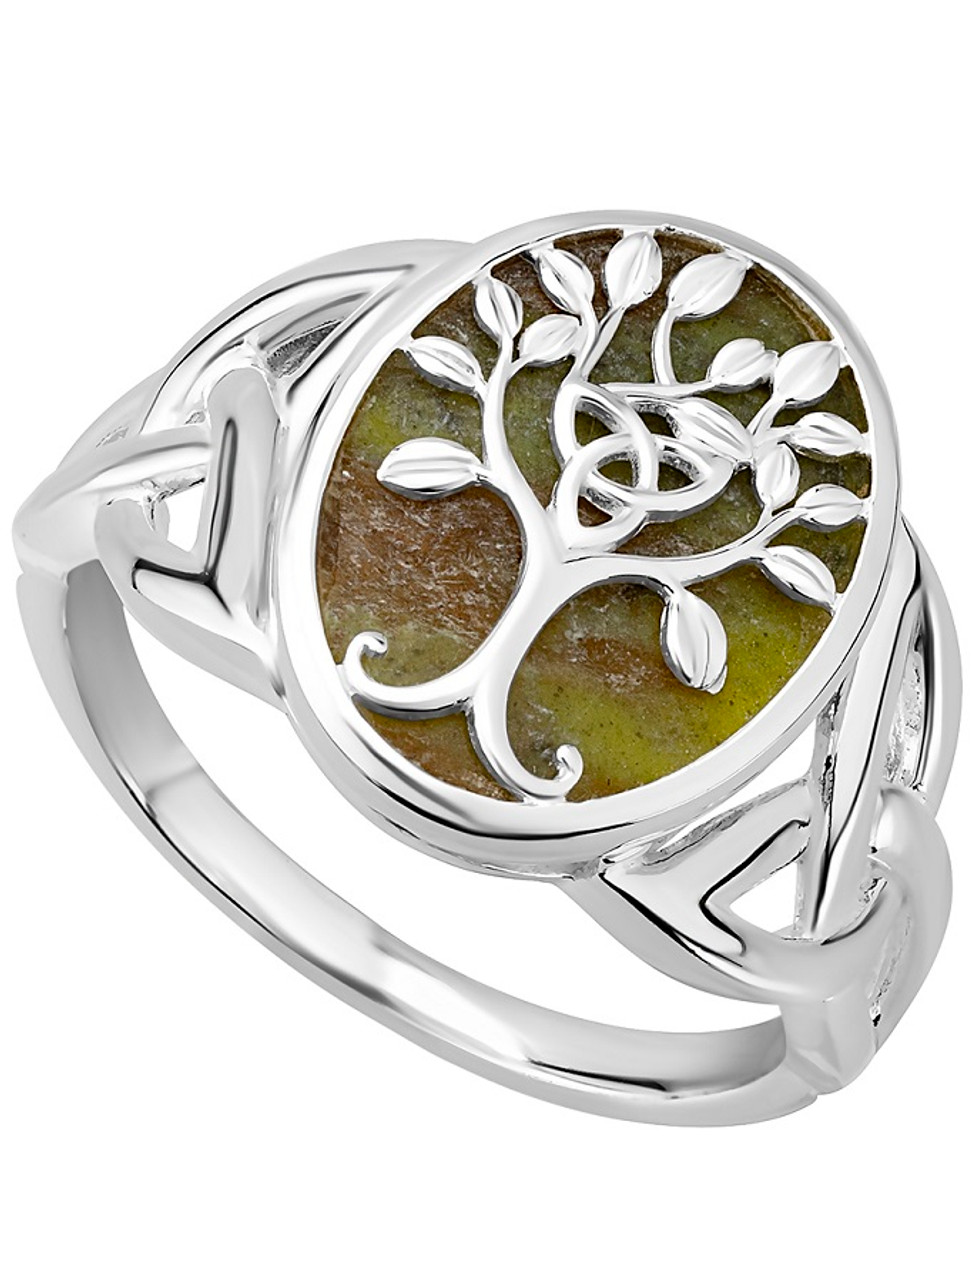 Tree of Life Scarf Ring Connemara Marble - Connemara Marble